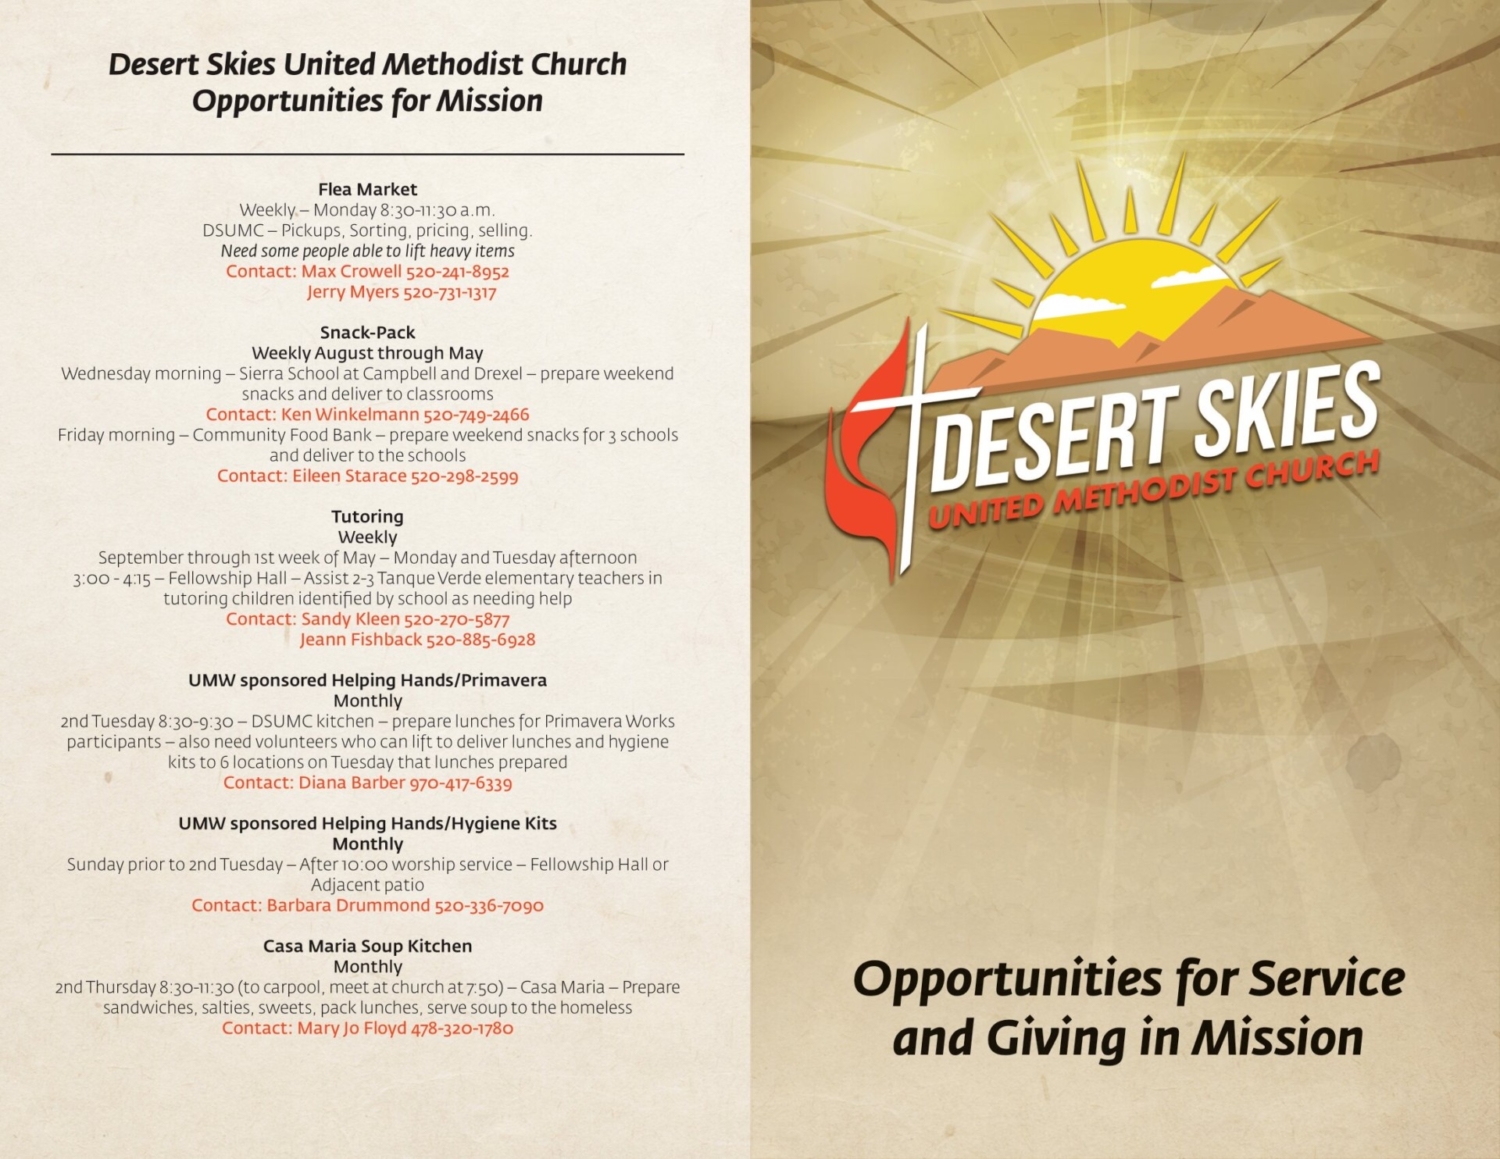 Desert Skies United Methodist Church Mission